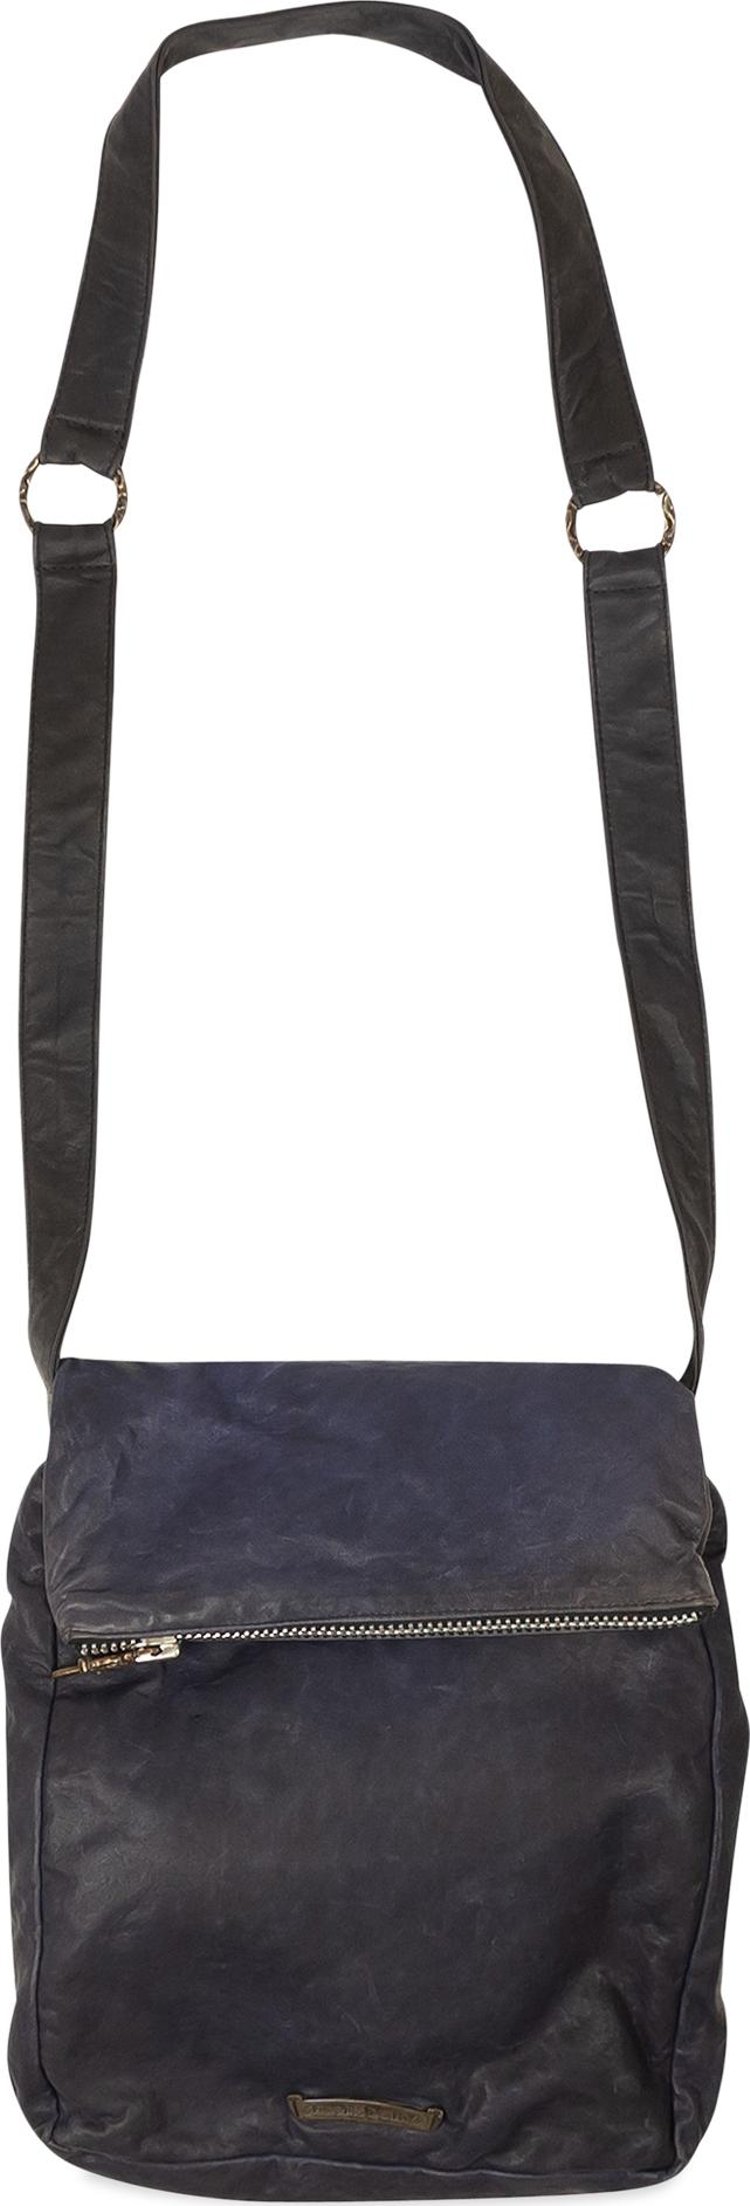 Chrome Hearts Leather Messenger Bag 'Blue'